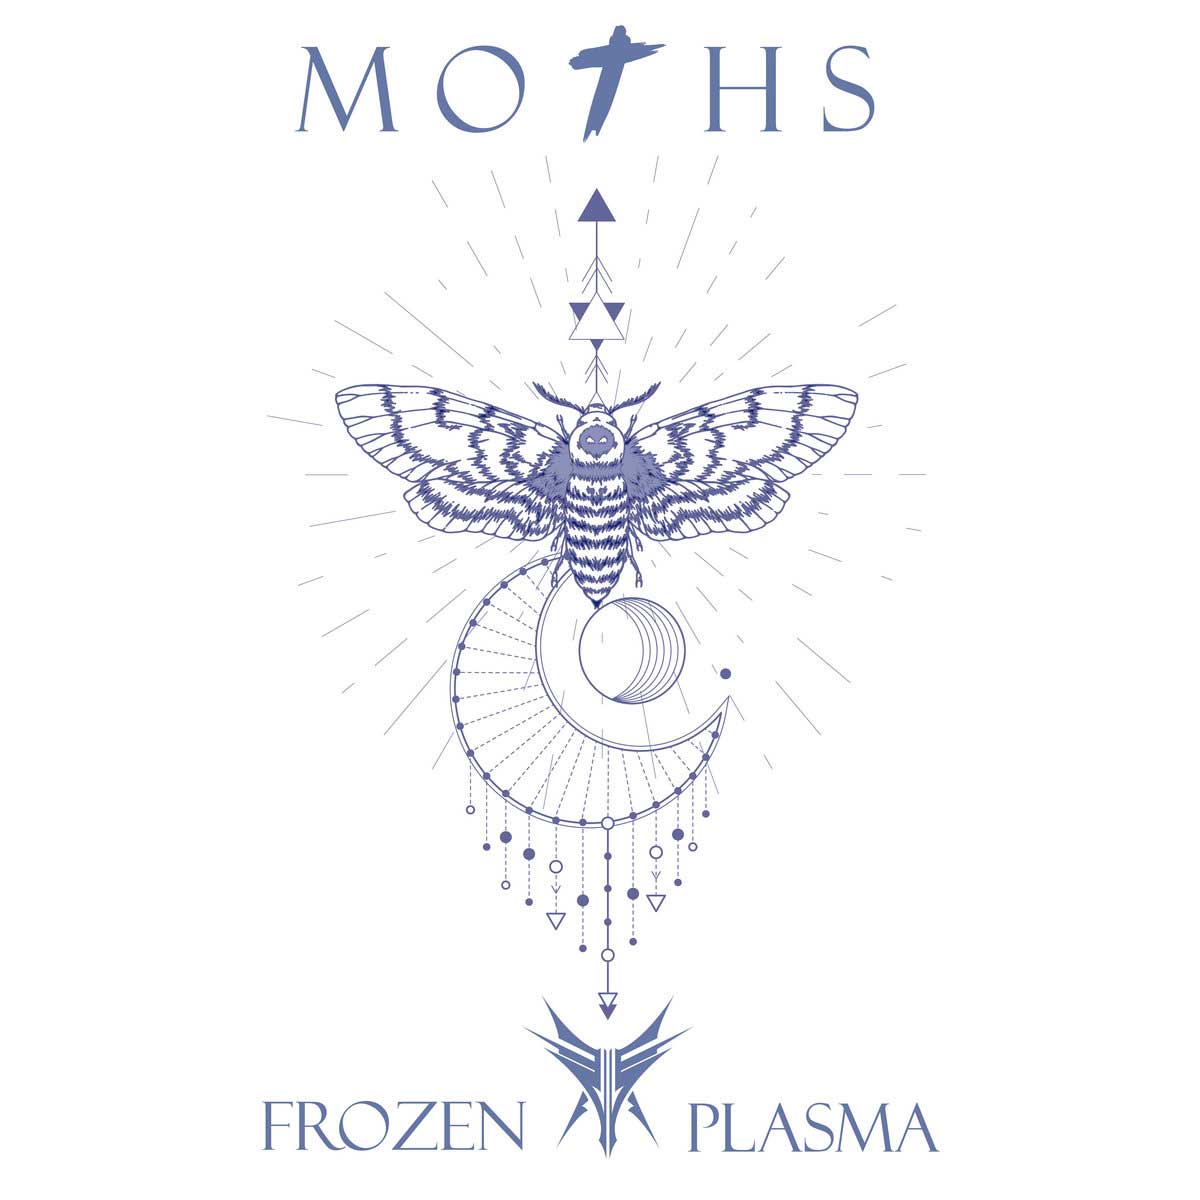 Frozen Plasma - Moths - Frozen Plasma - Moths